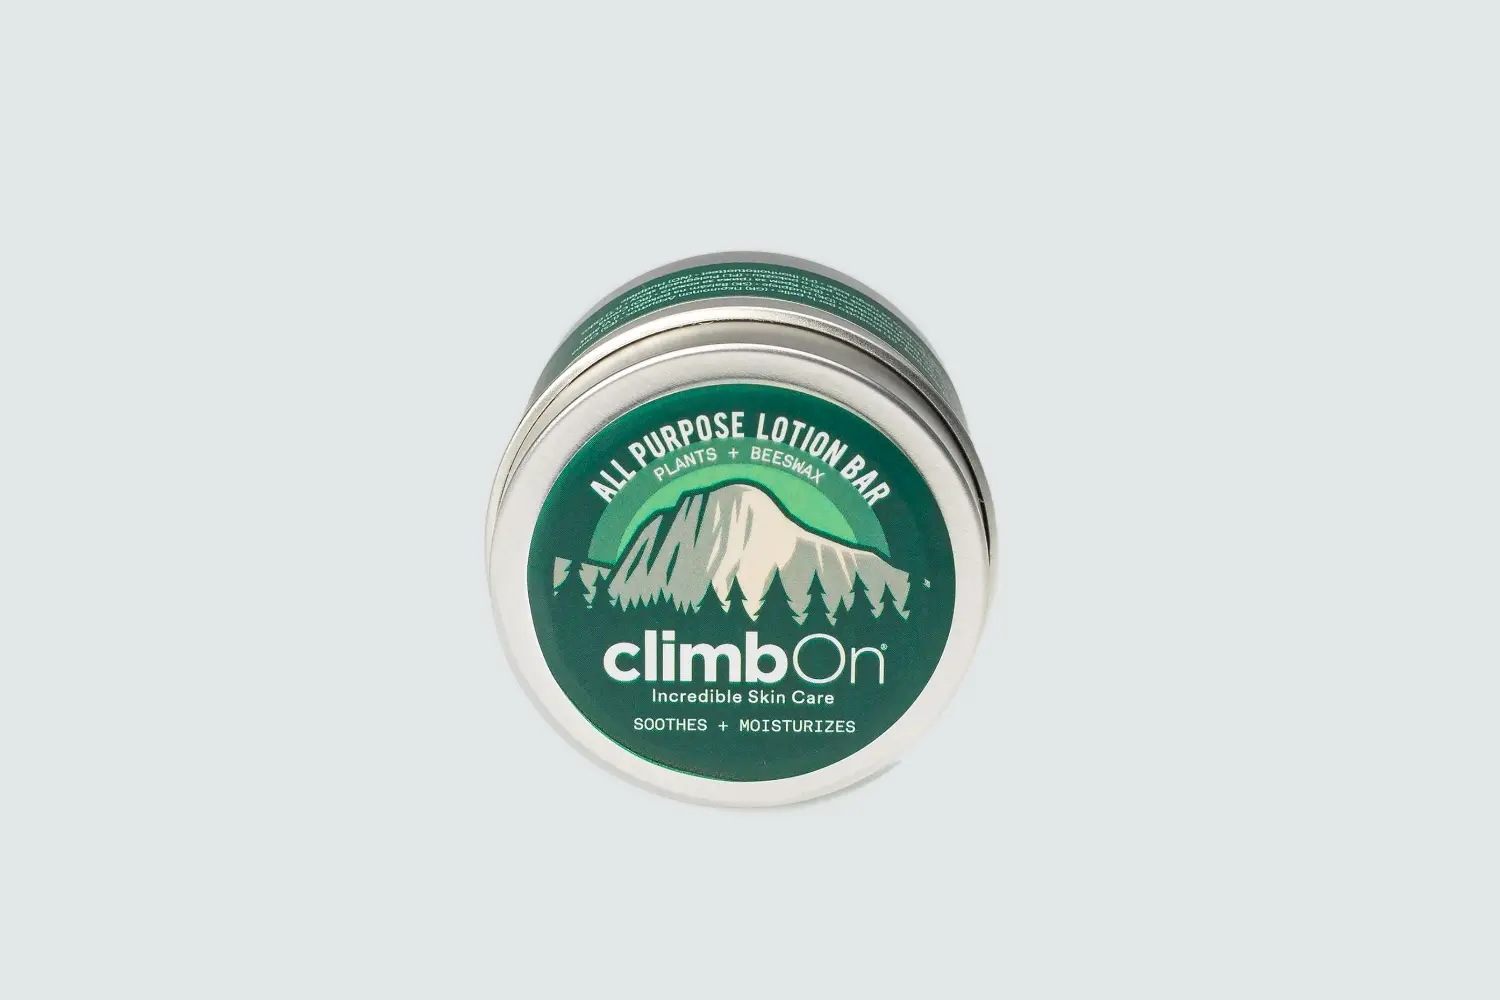 climbon lotion bar packaging